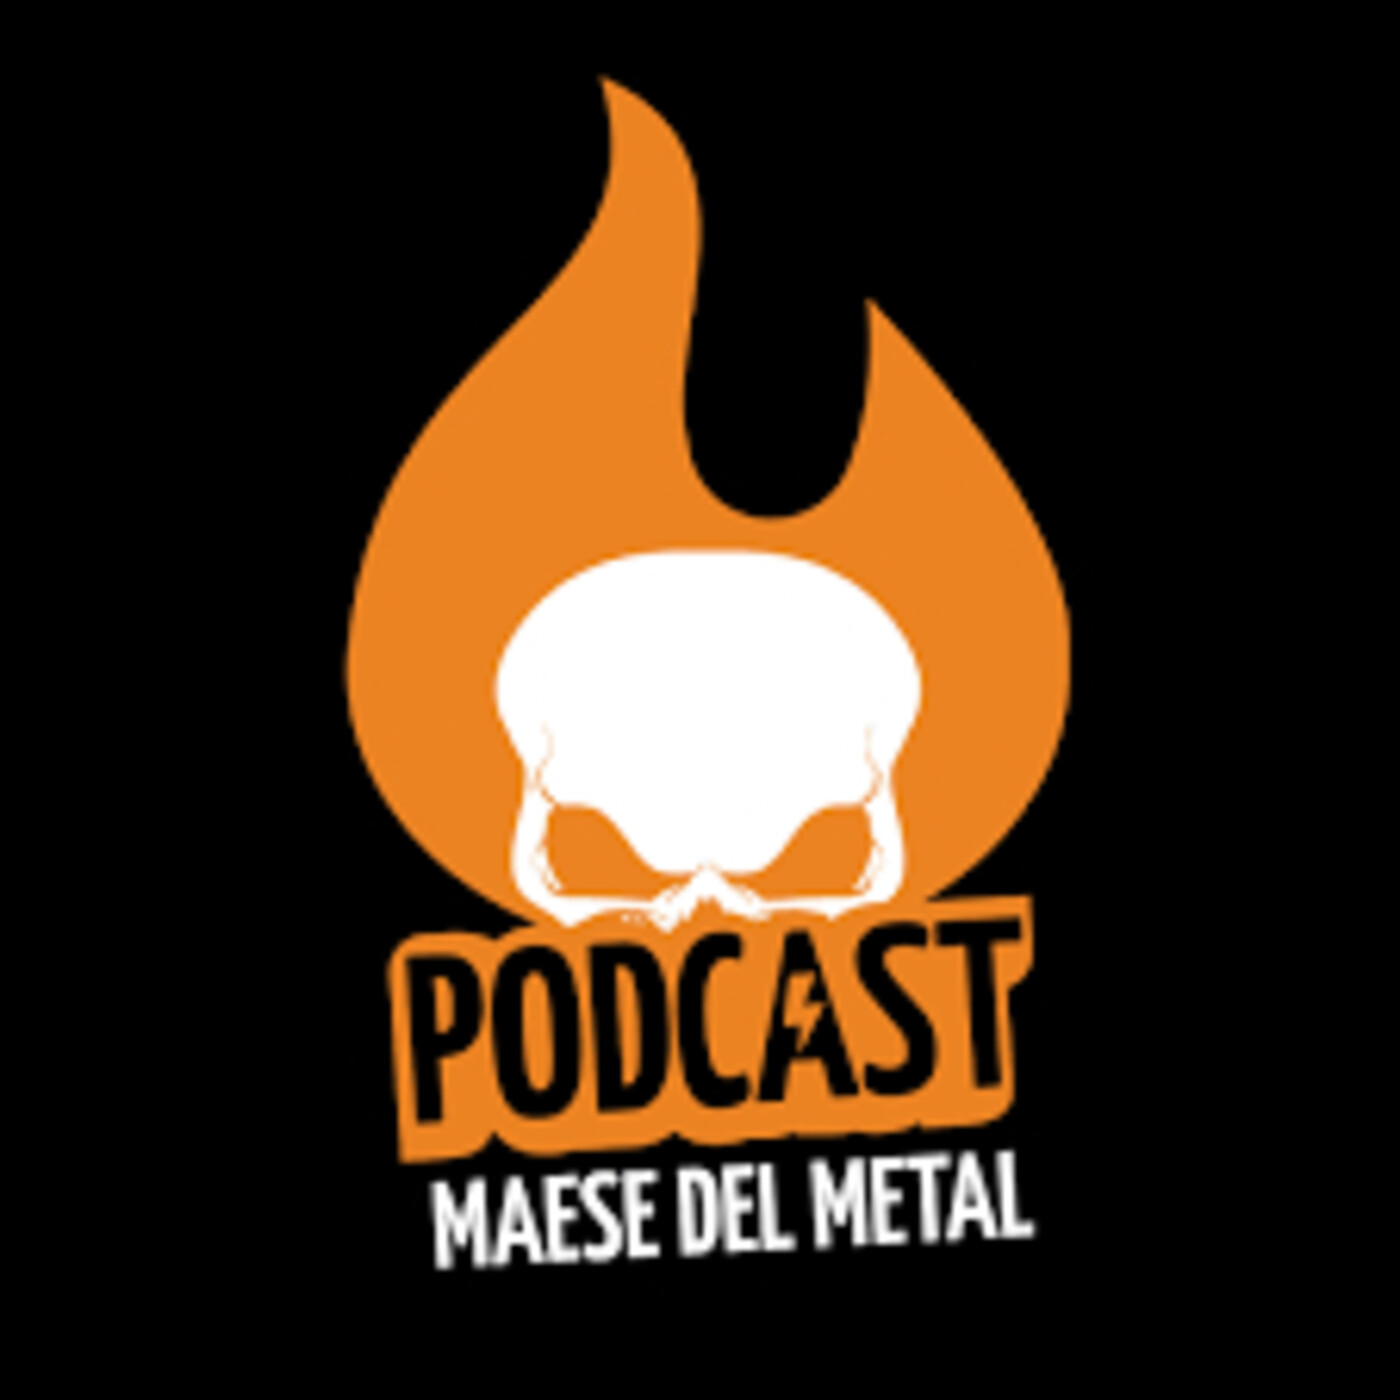 Maese del Metal